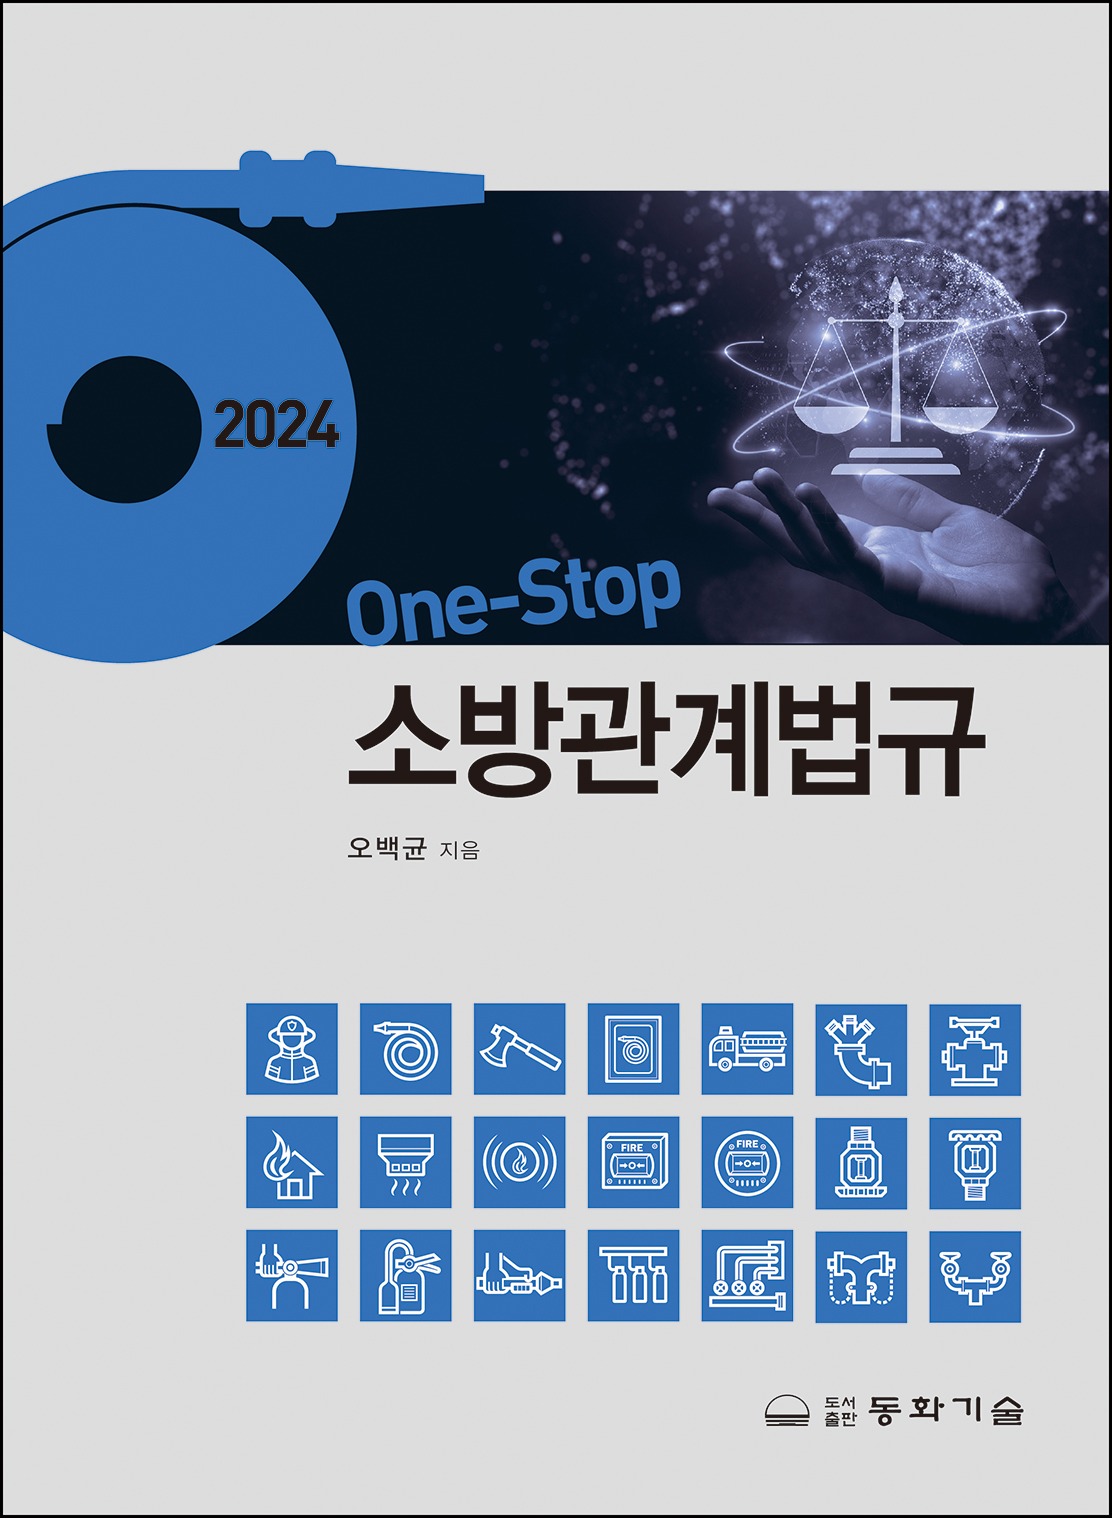 2024 One-Stop 소방관계법규